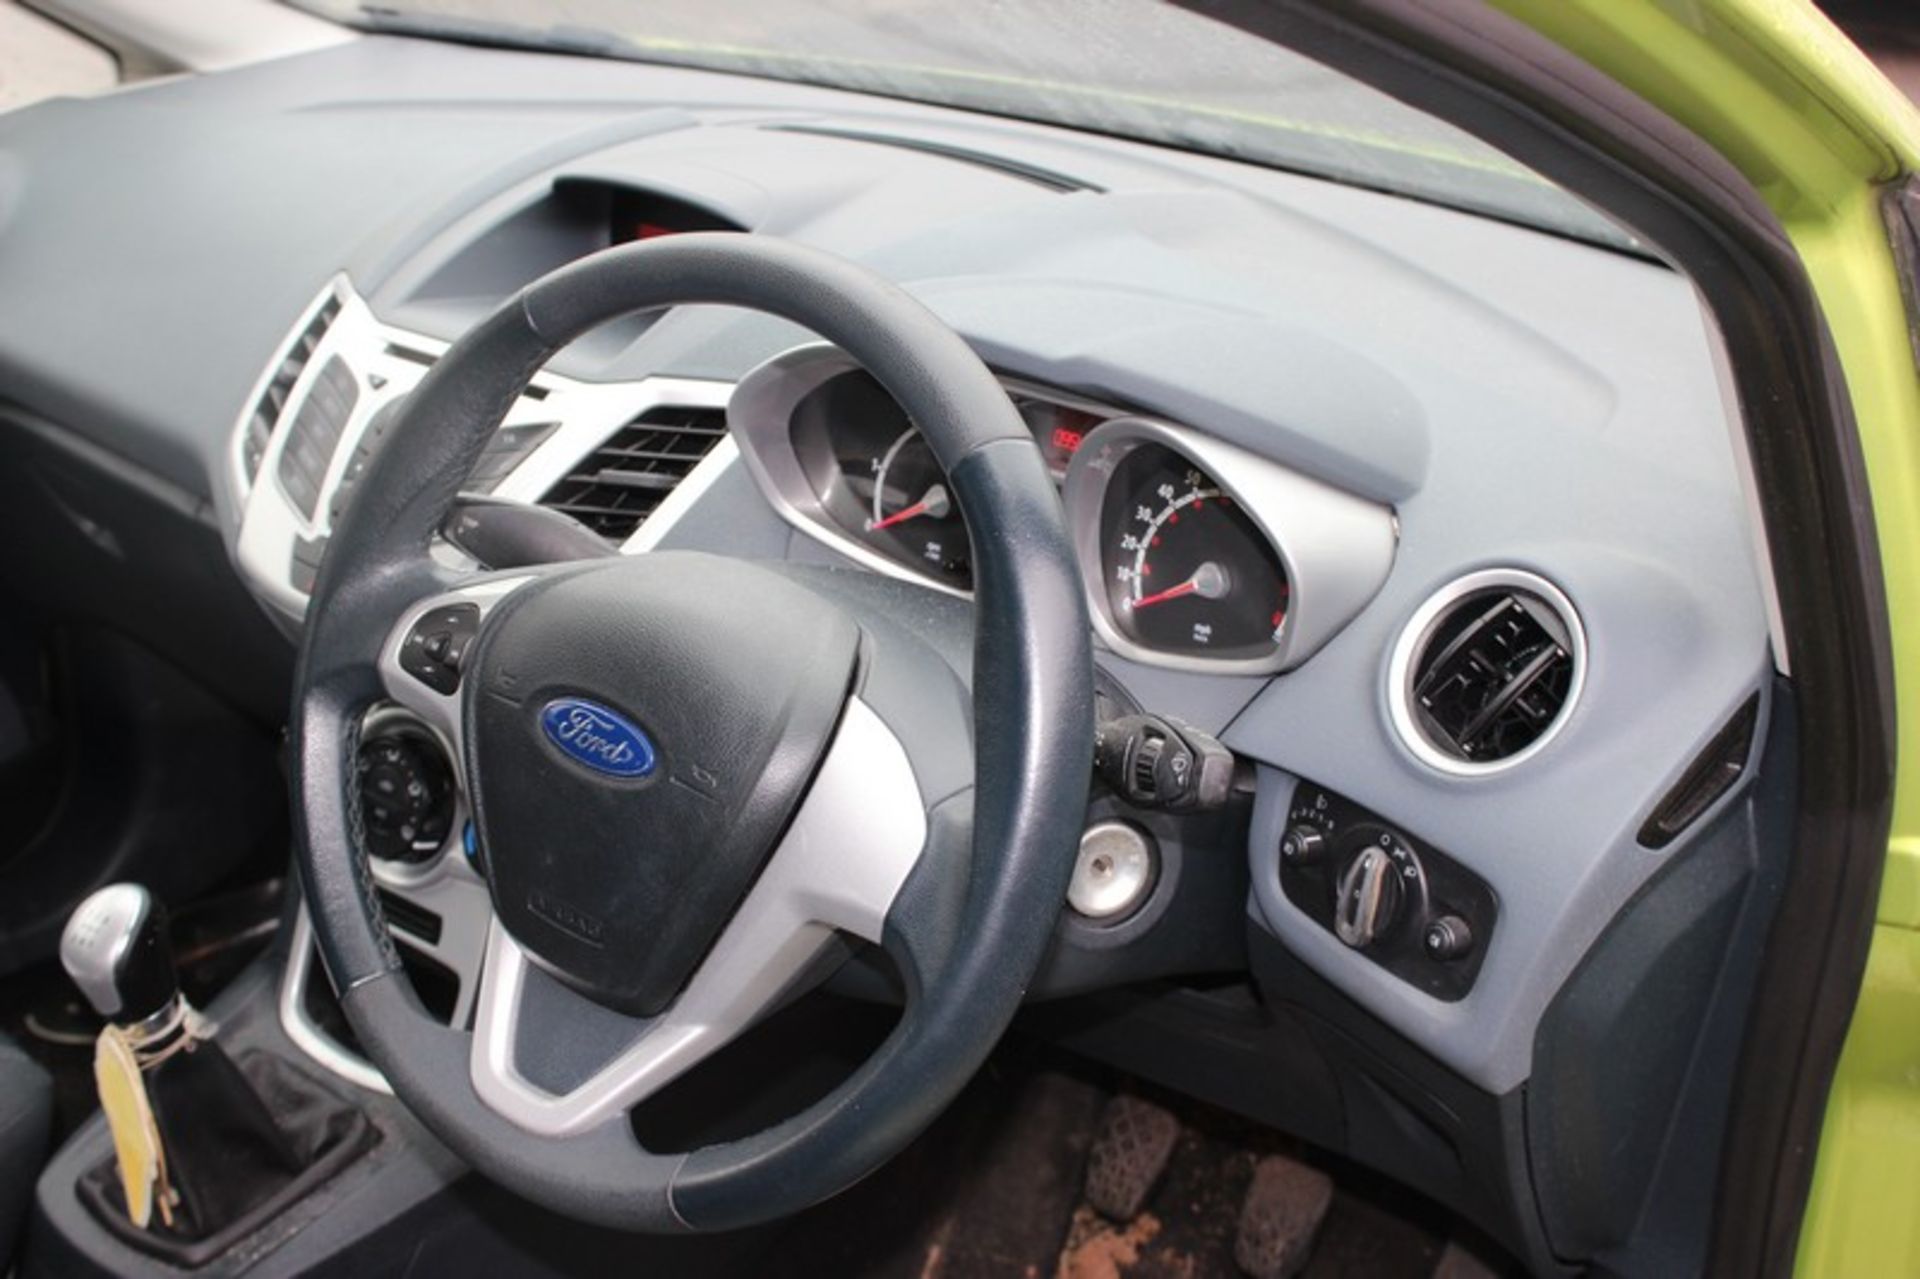 A 2009 Ford Fiesta Zetec 90 TDCI five door hatchback, registration number LL09 PBF, 1560cc, - Image 5 of 9